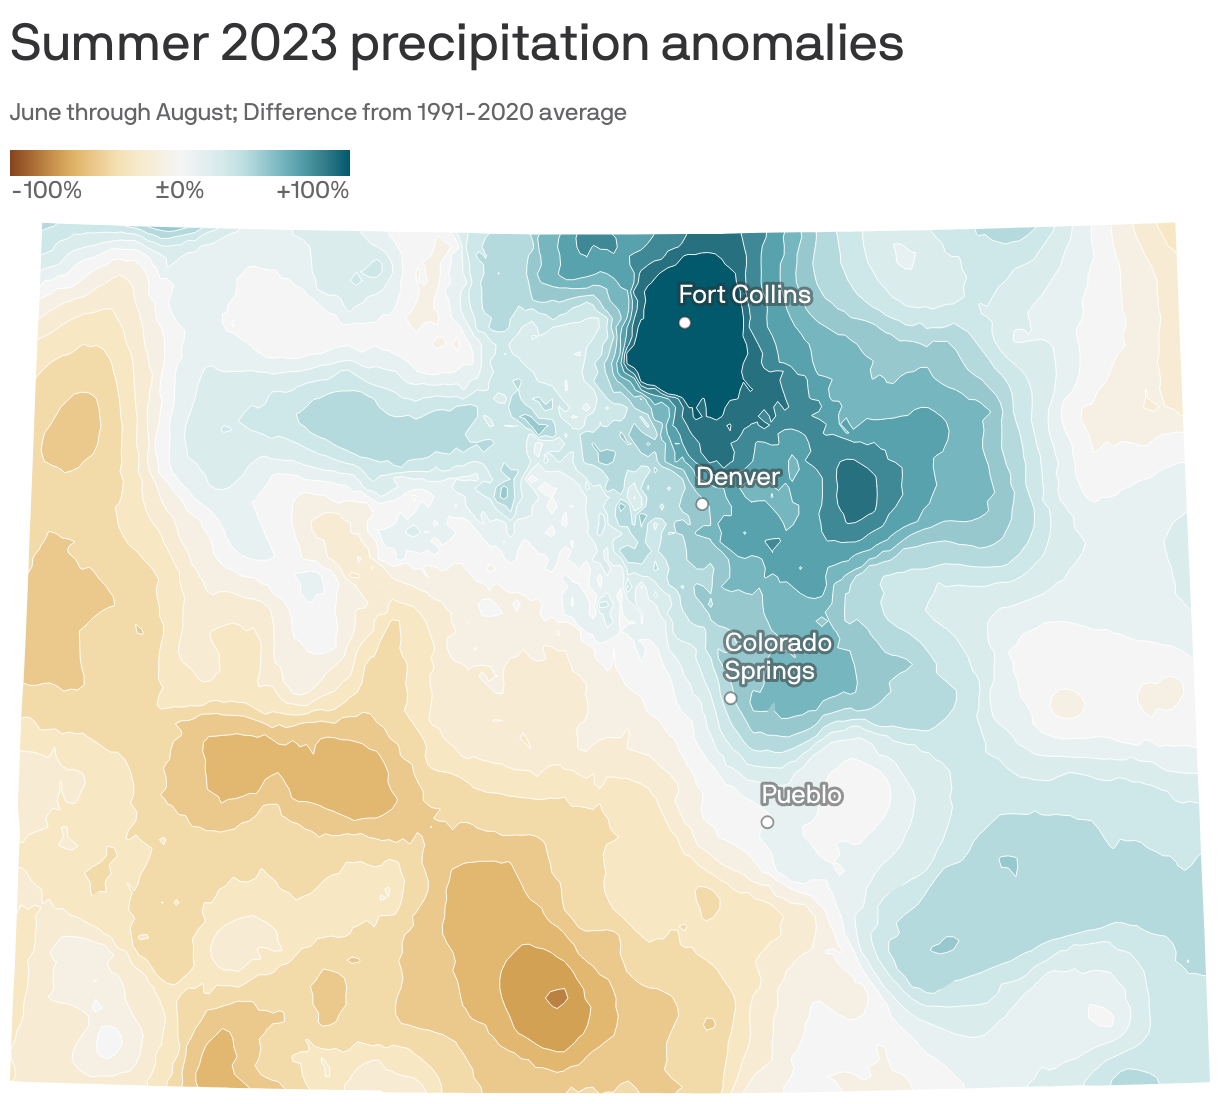 Summer 2023 precipitation anomalies